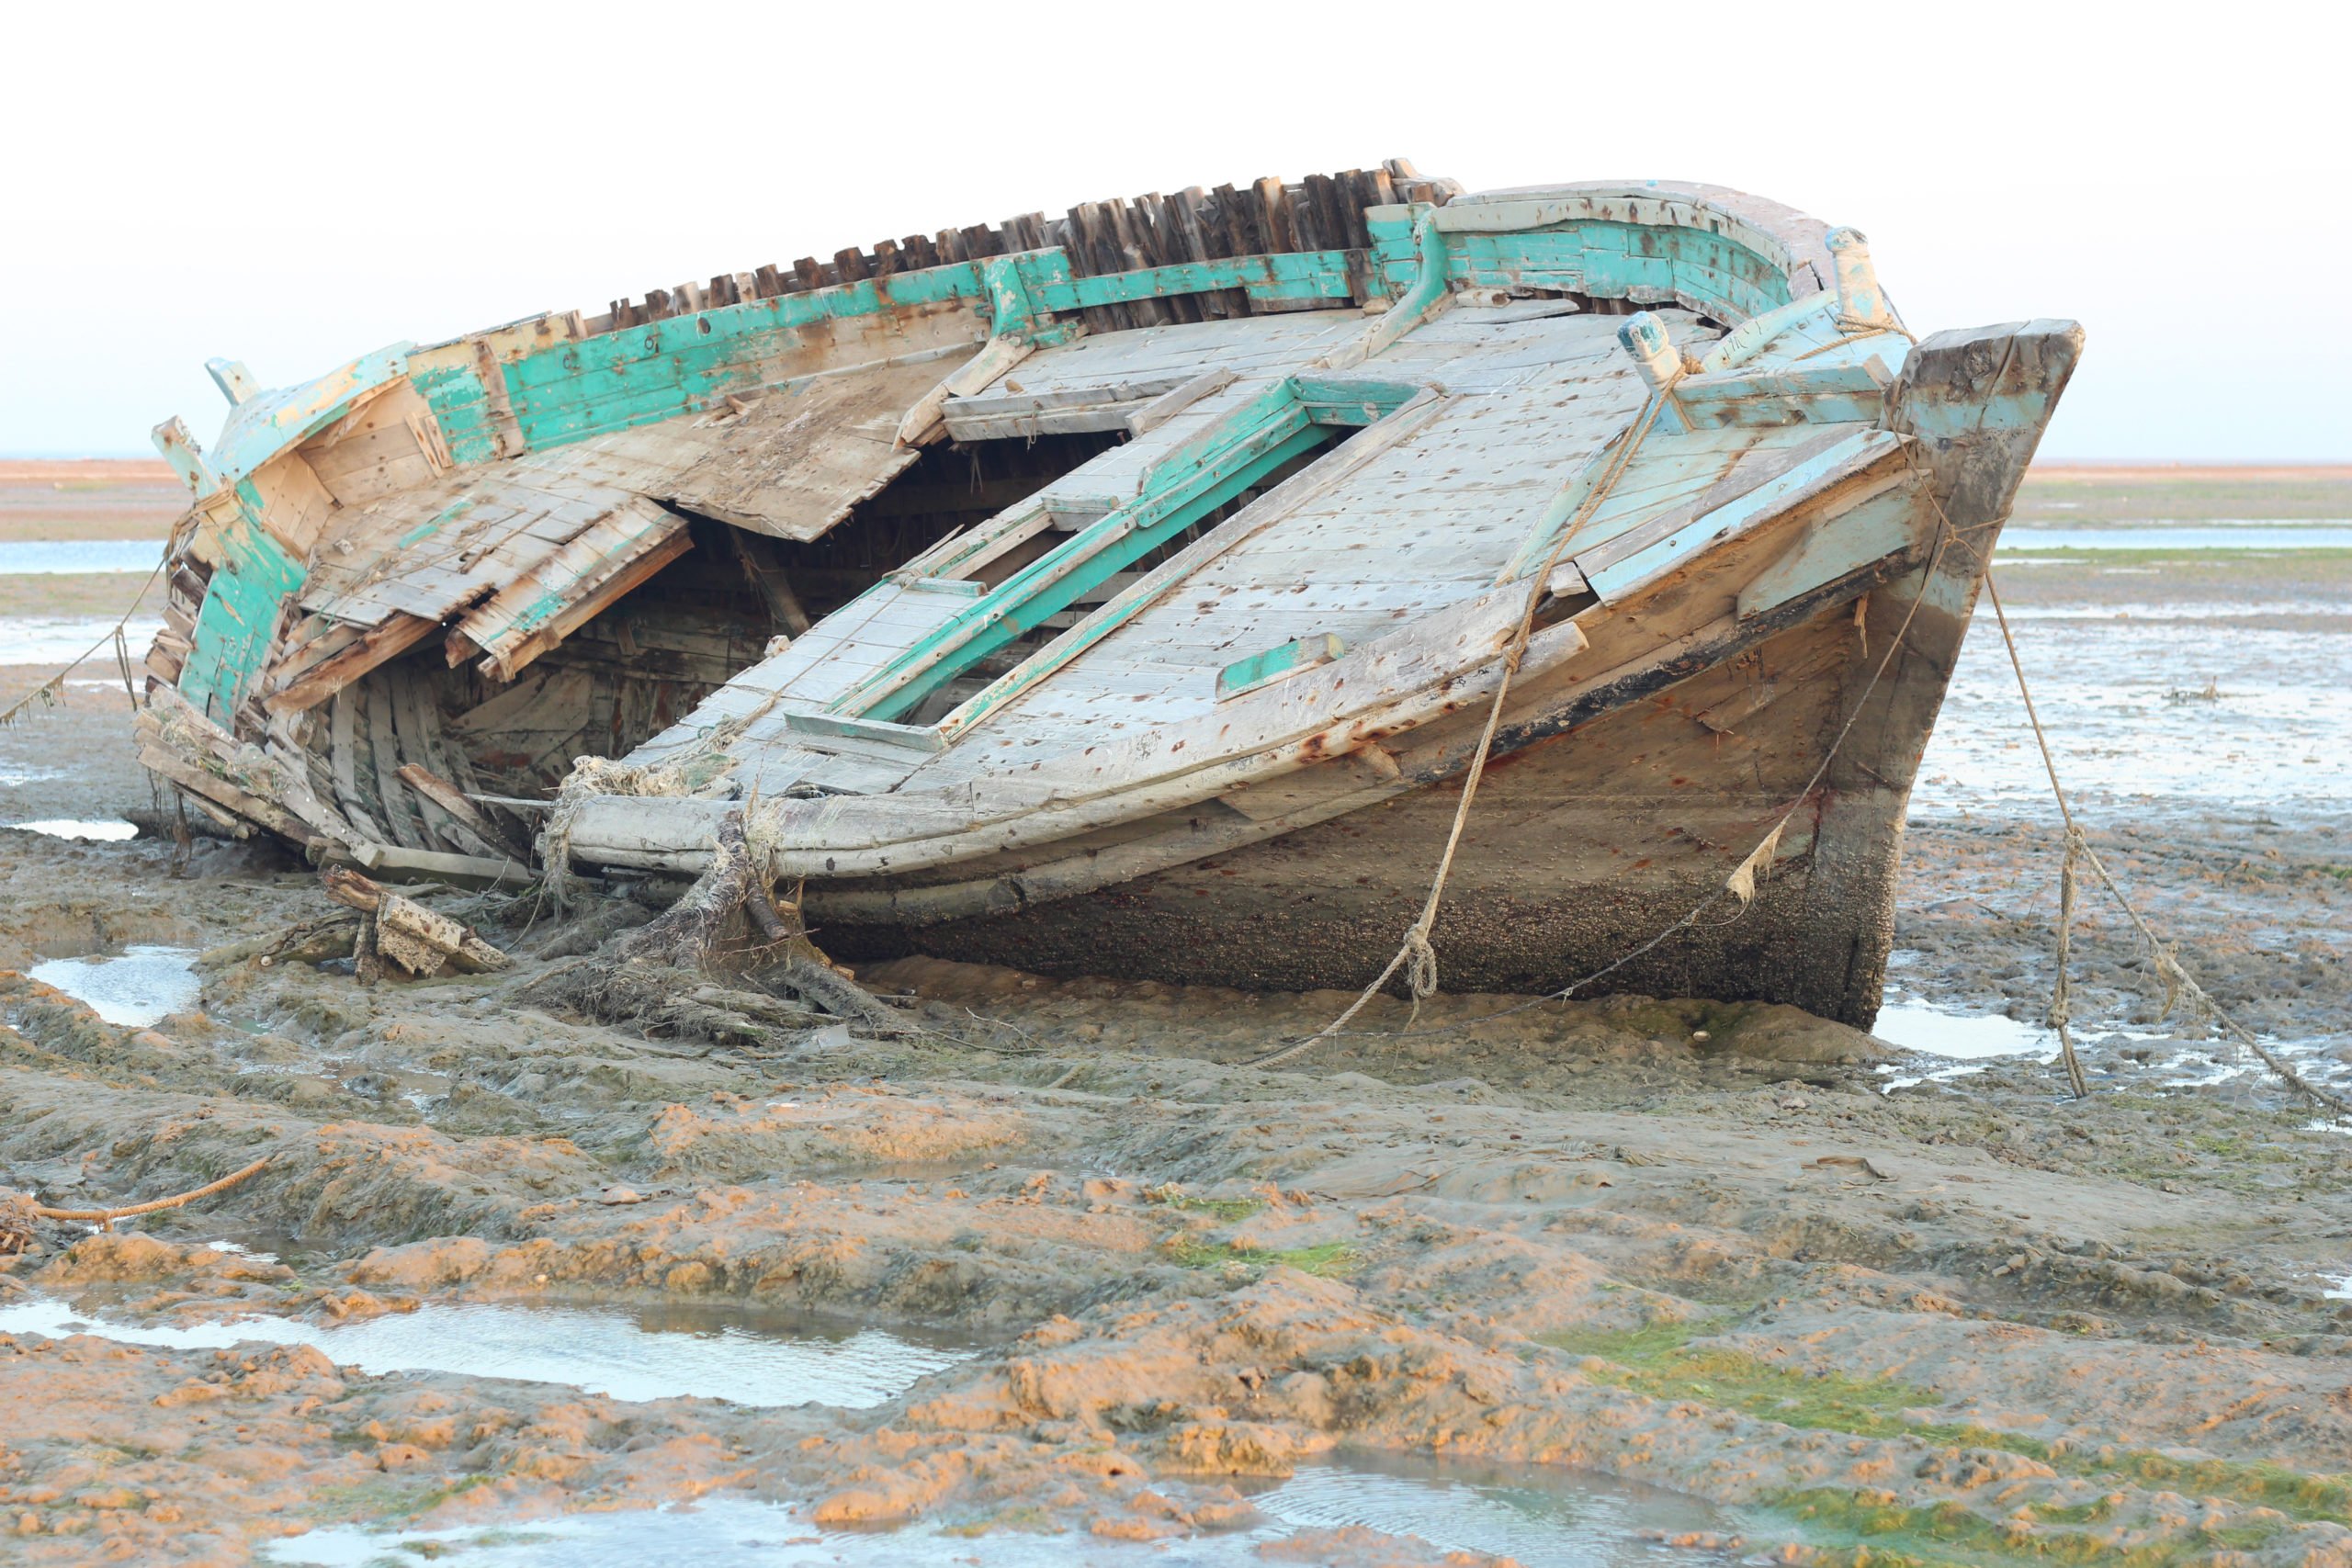 <p>ماہگیری کی کشتی گوادر کے قریب بحیرہ عرب کے ساحل پر دیگر ایسی کشتیوں کی طرح لاوارث پڑی ہے &#8211; بندرگاہ فنڈز کی کمی اور گھٹتے ہوئے ذخائرکی وجہ سے بند کردی گئی ہے [تصویر بشکریہ  ساجد نور بلوچ] </p>